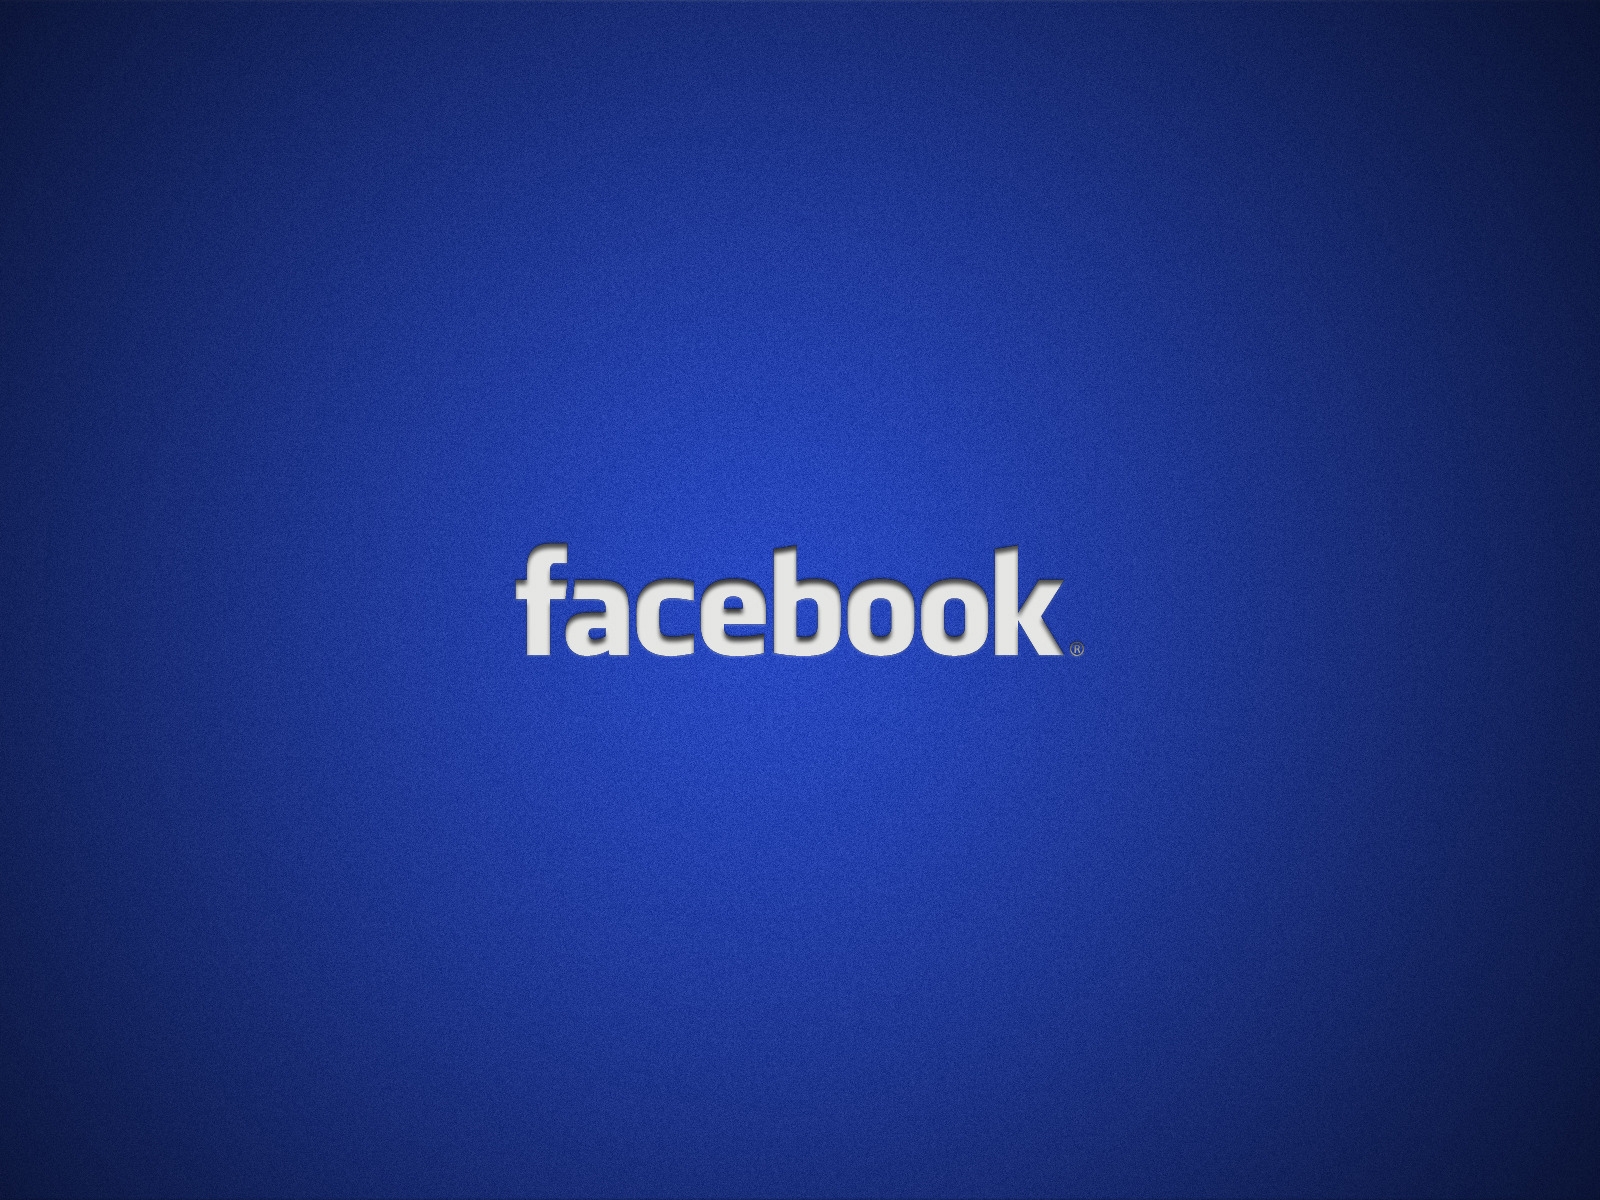 Facebook Logo for 1600 x 1200 resolution